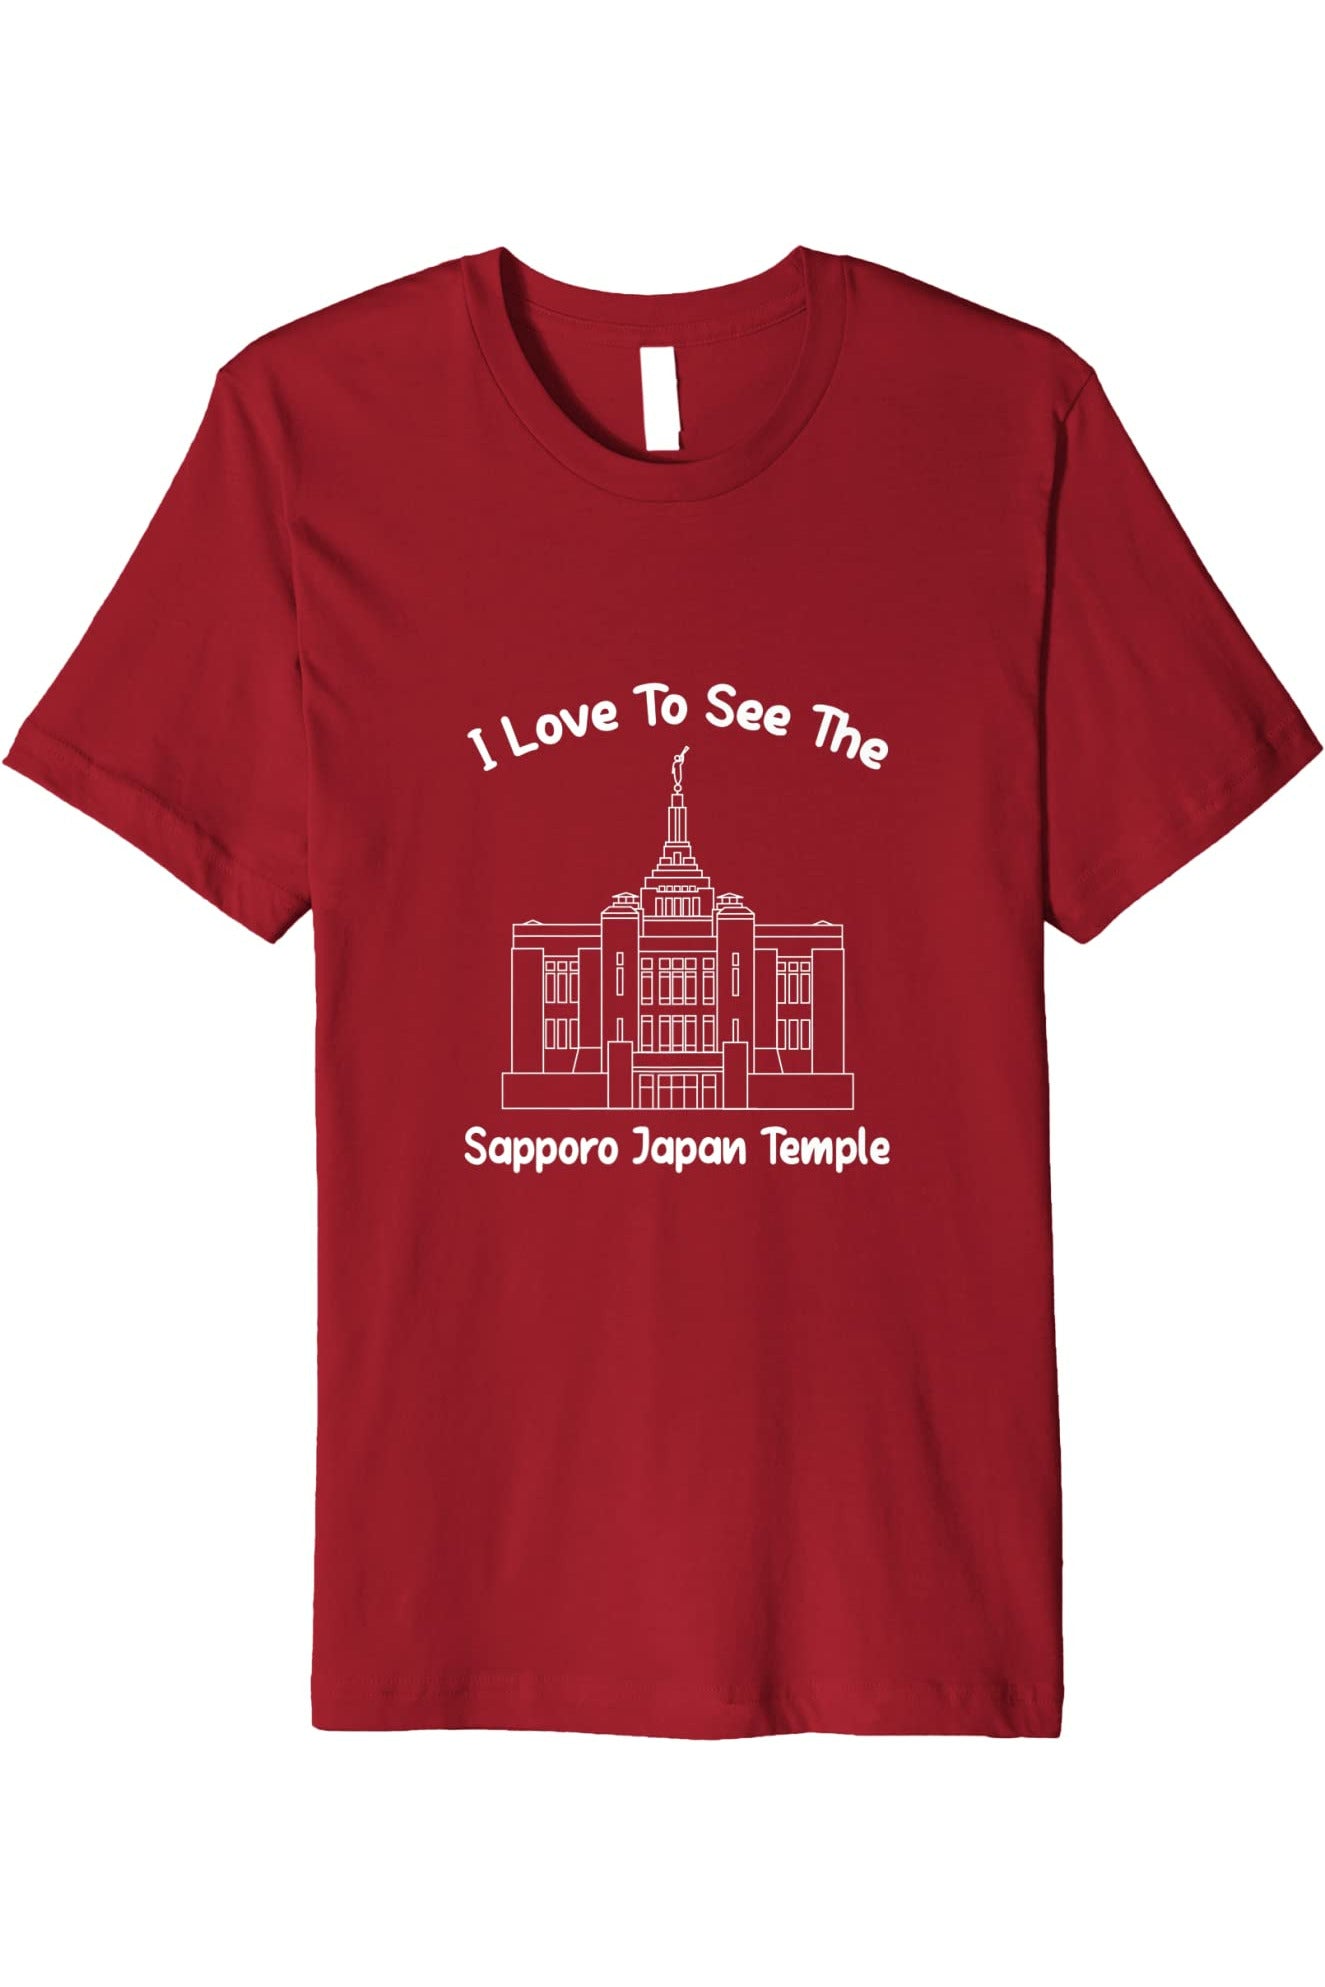 Sapporo Japan Temple T-Shirt - Premium - Primary Style (English) US